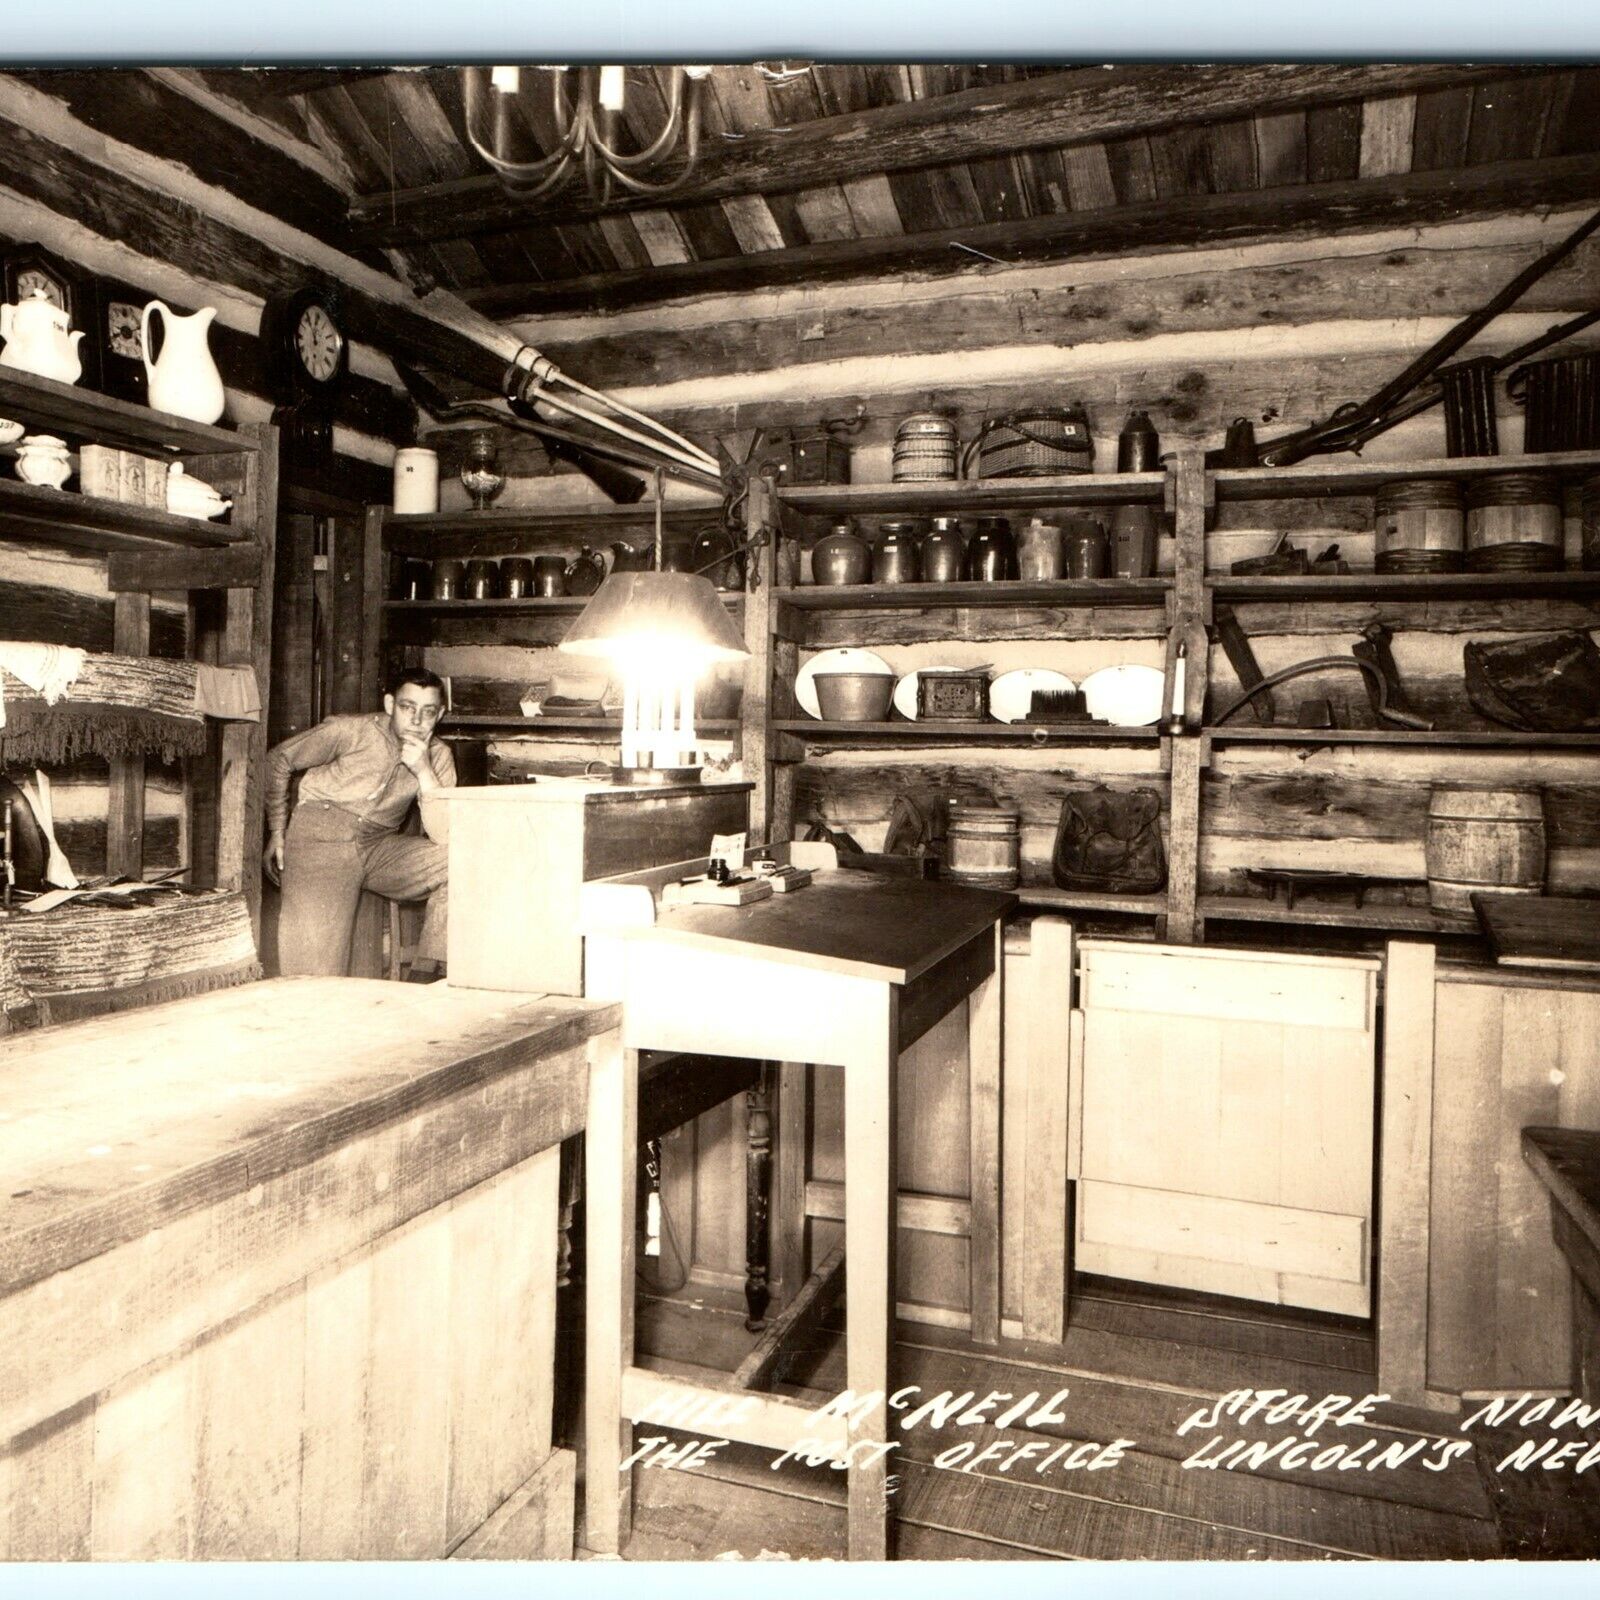 c1930s New Salem, IL RPPC Interior Hill McNeil Store Real Photo Primitives A30